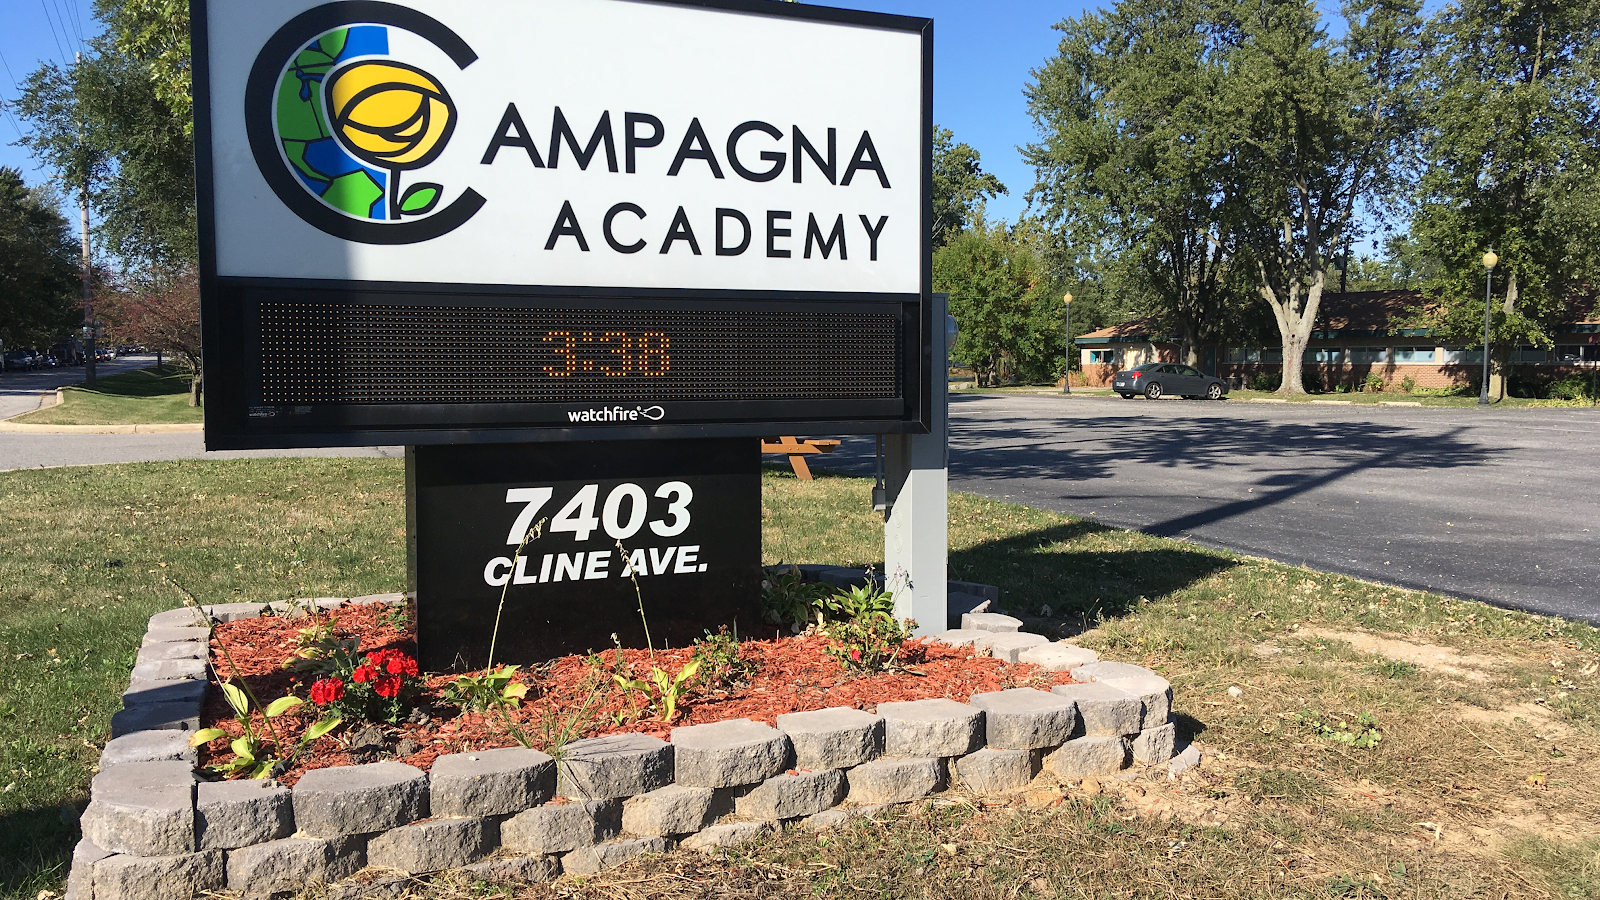 Campagna Academy